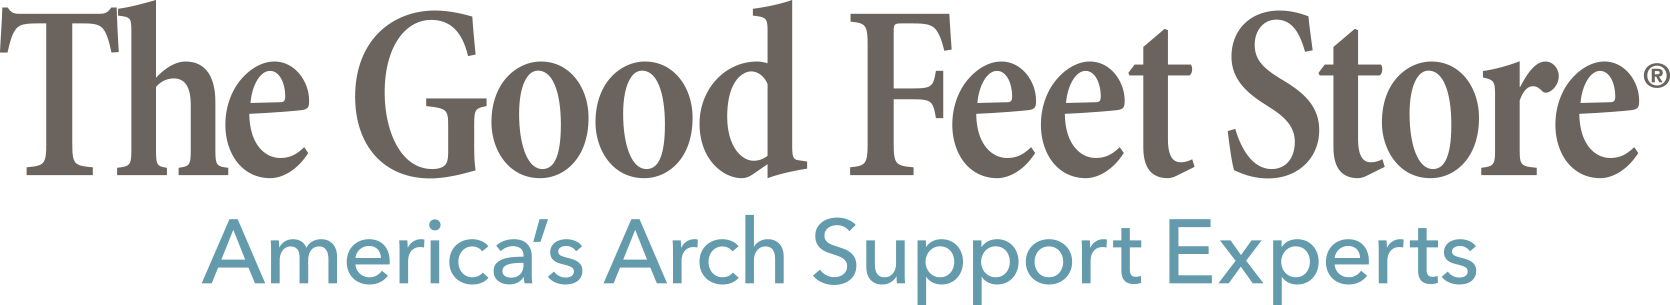 Goodfeet logo